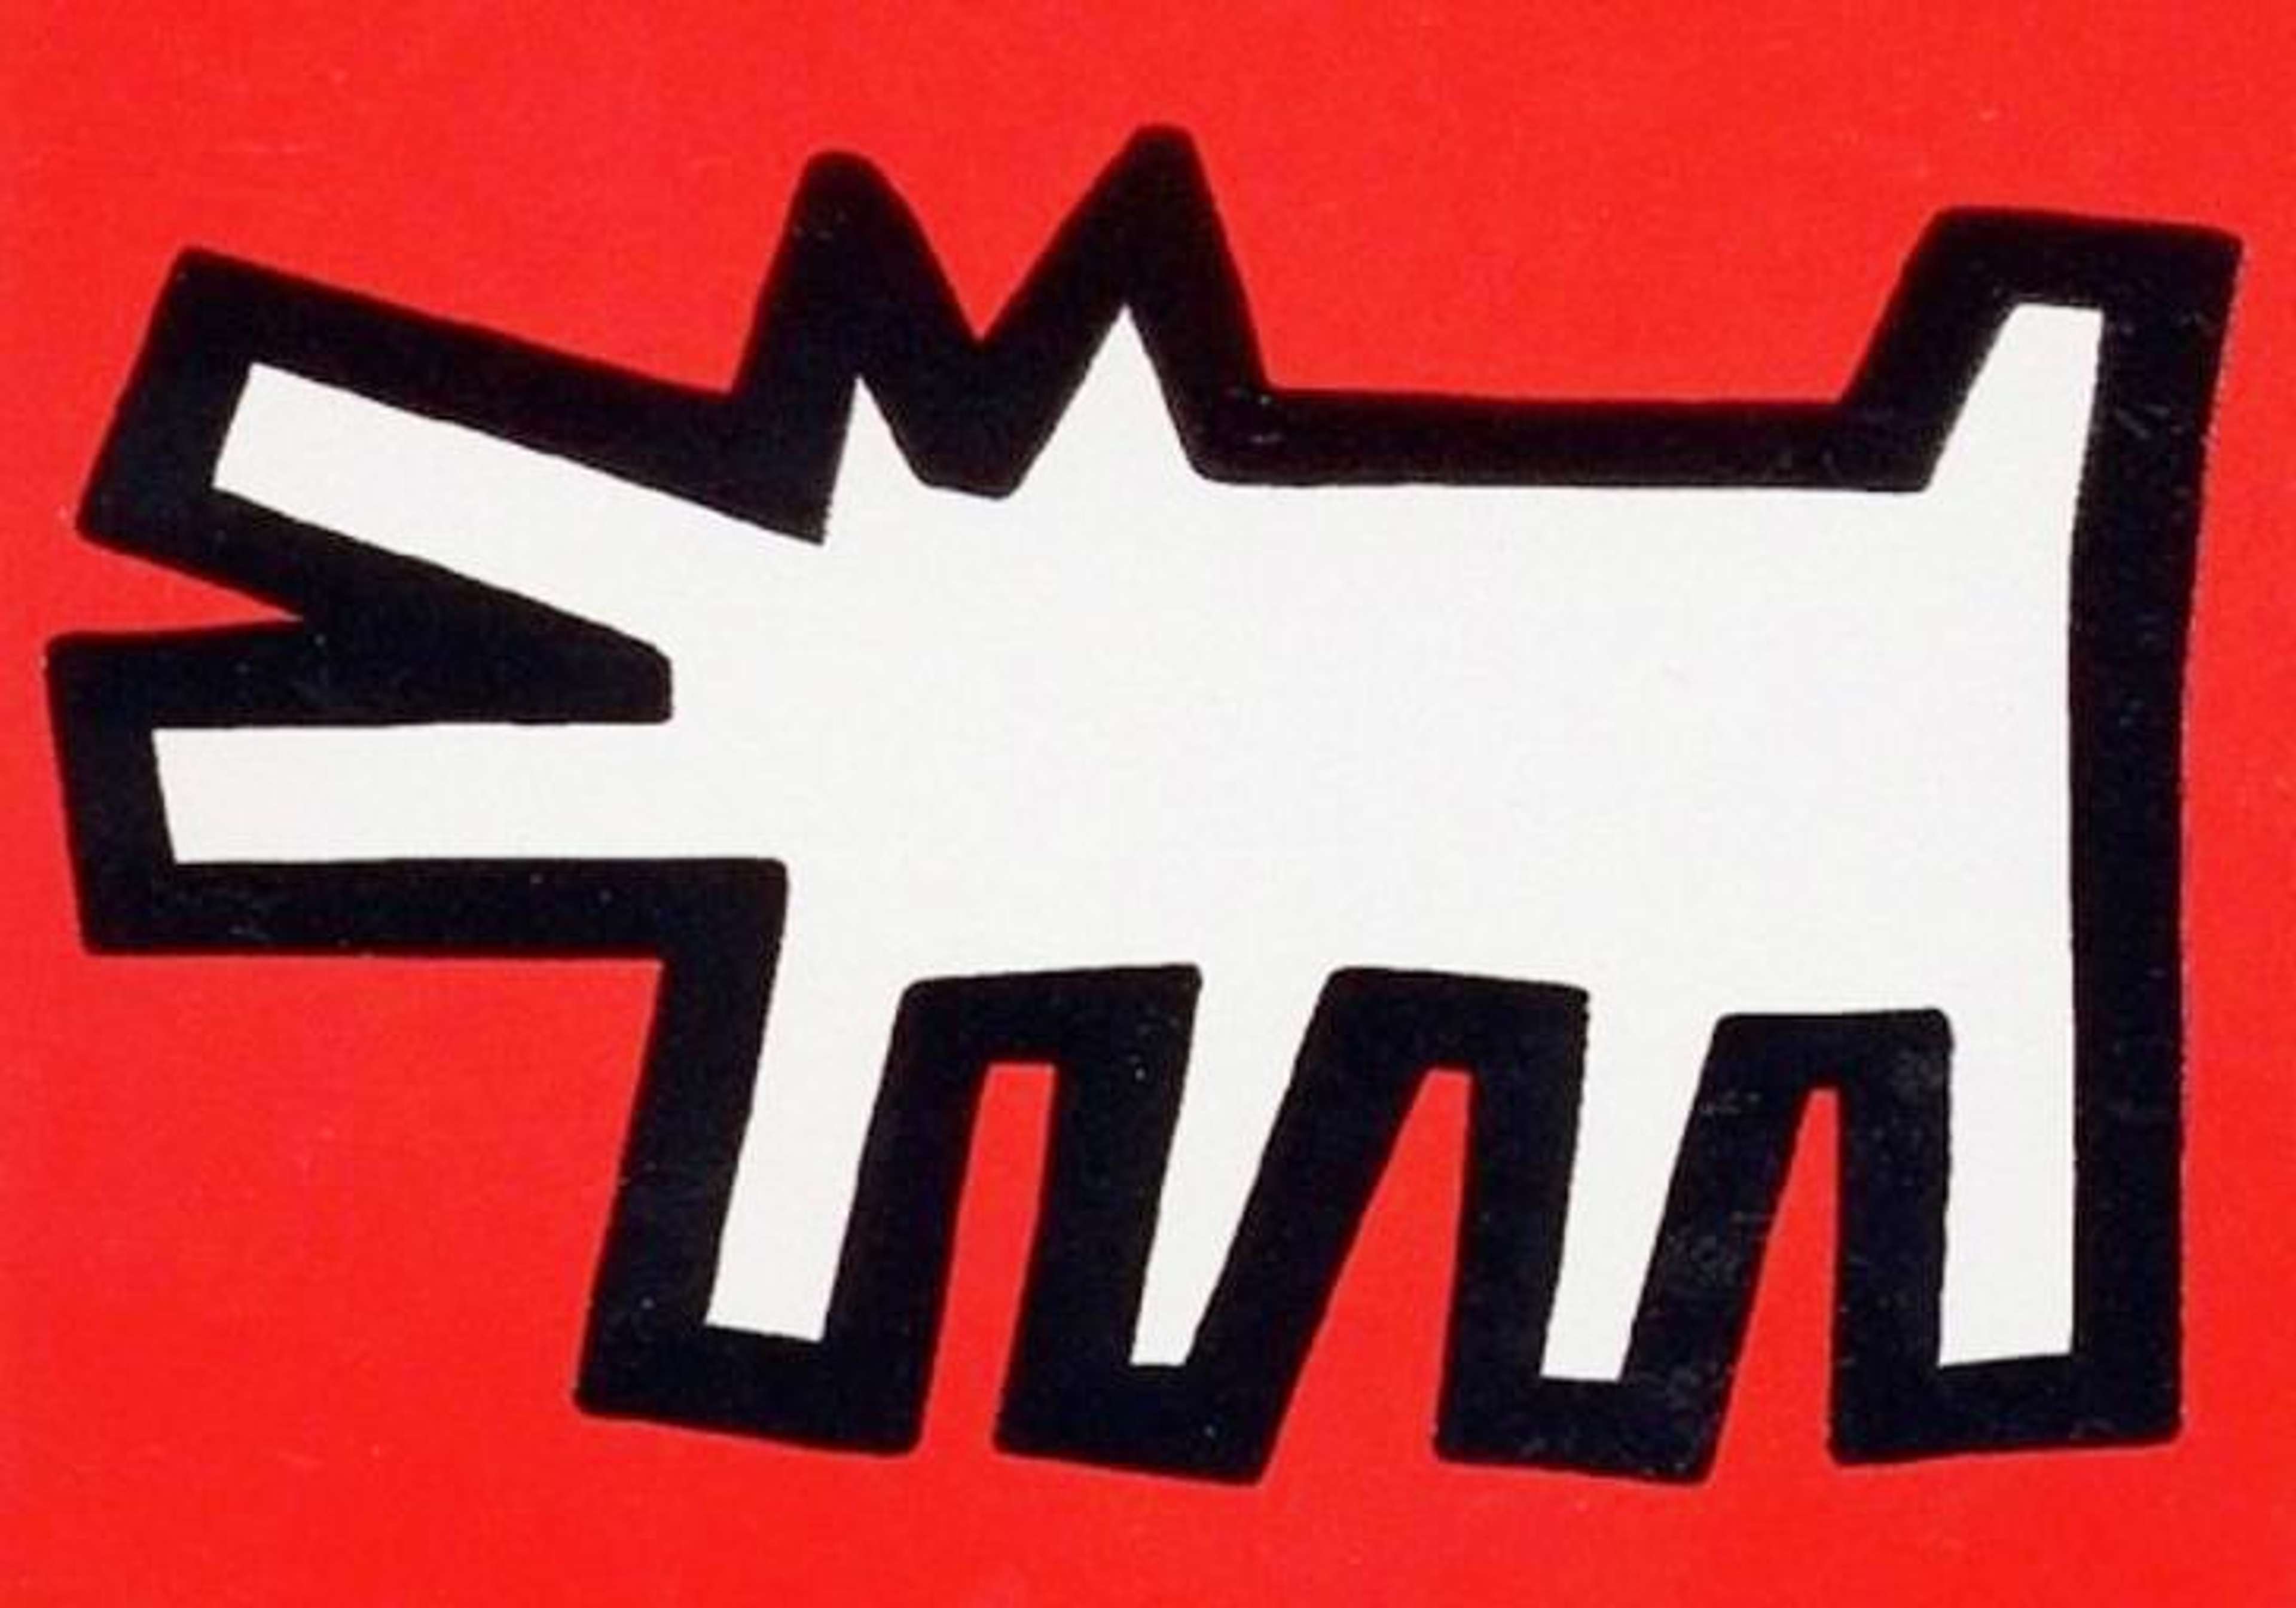 Barking Dog by Keith Haring - MyArtBroker